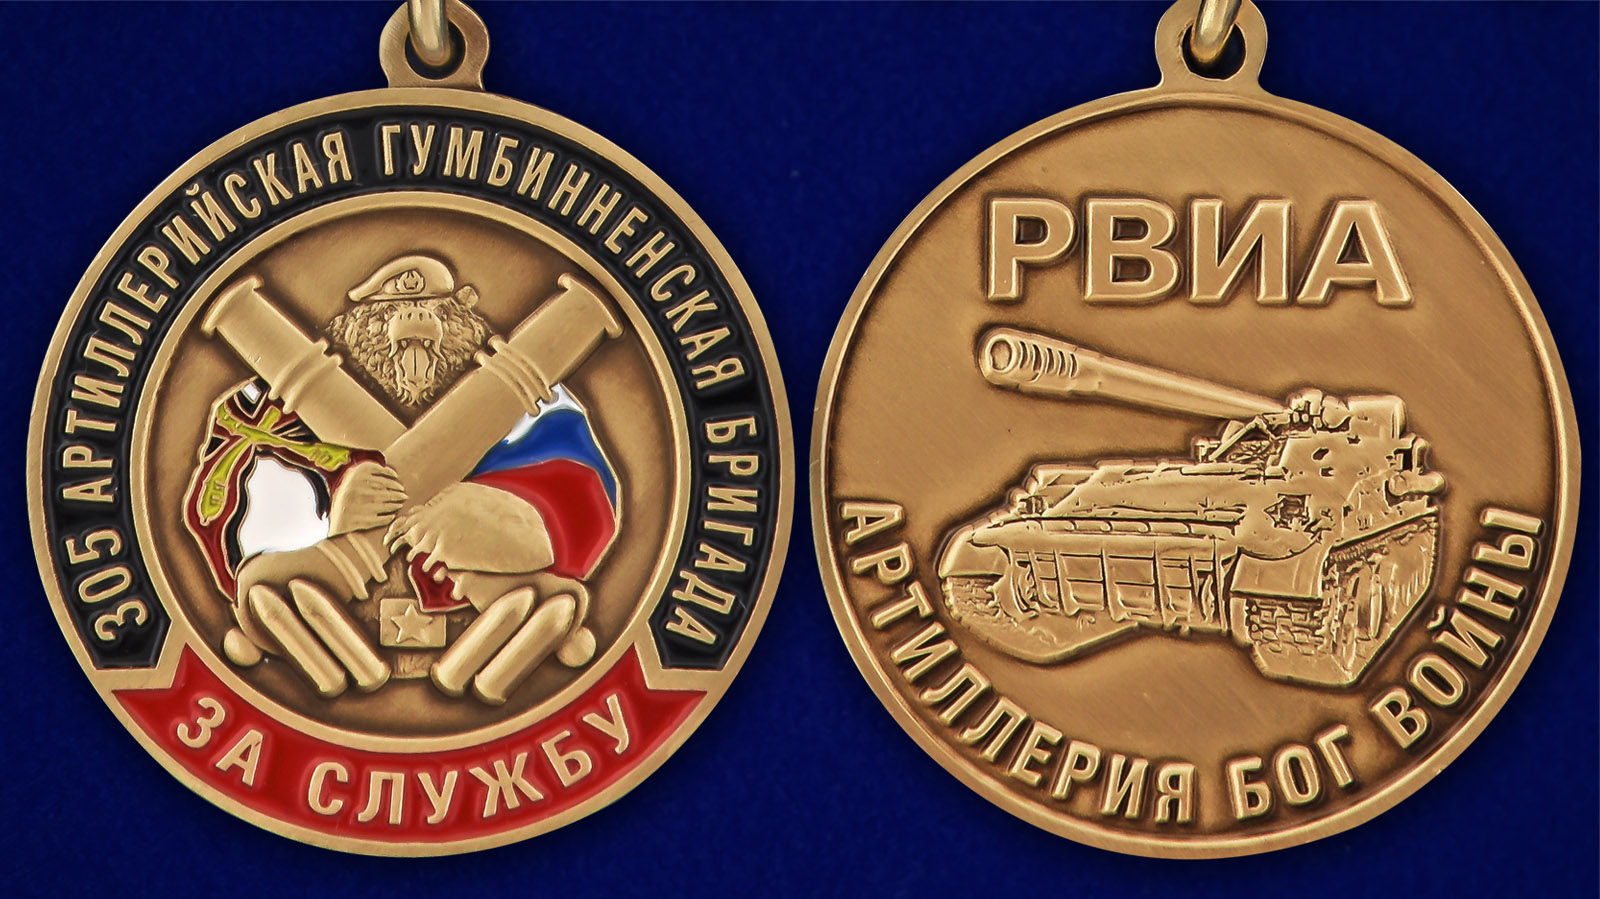 Описание медали РВиА "За службу в 305-ой артиллерийской бригаде" - аверс и реверс